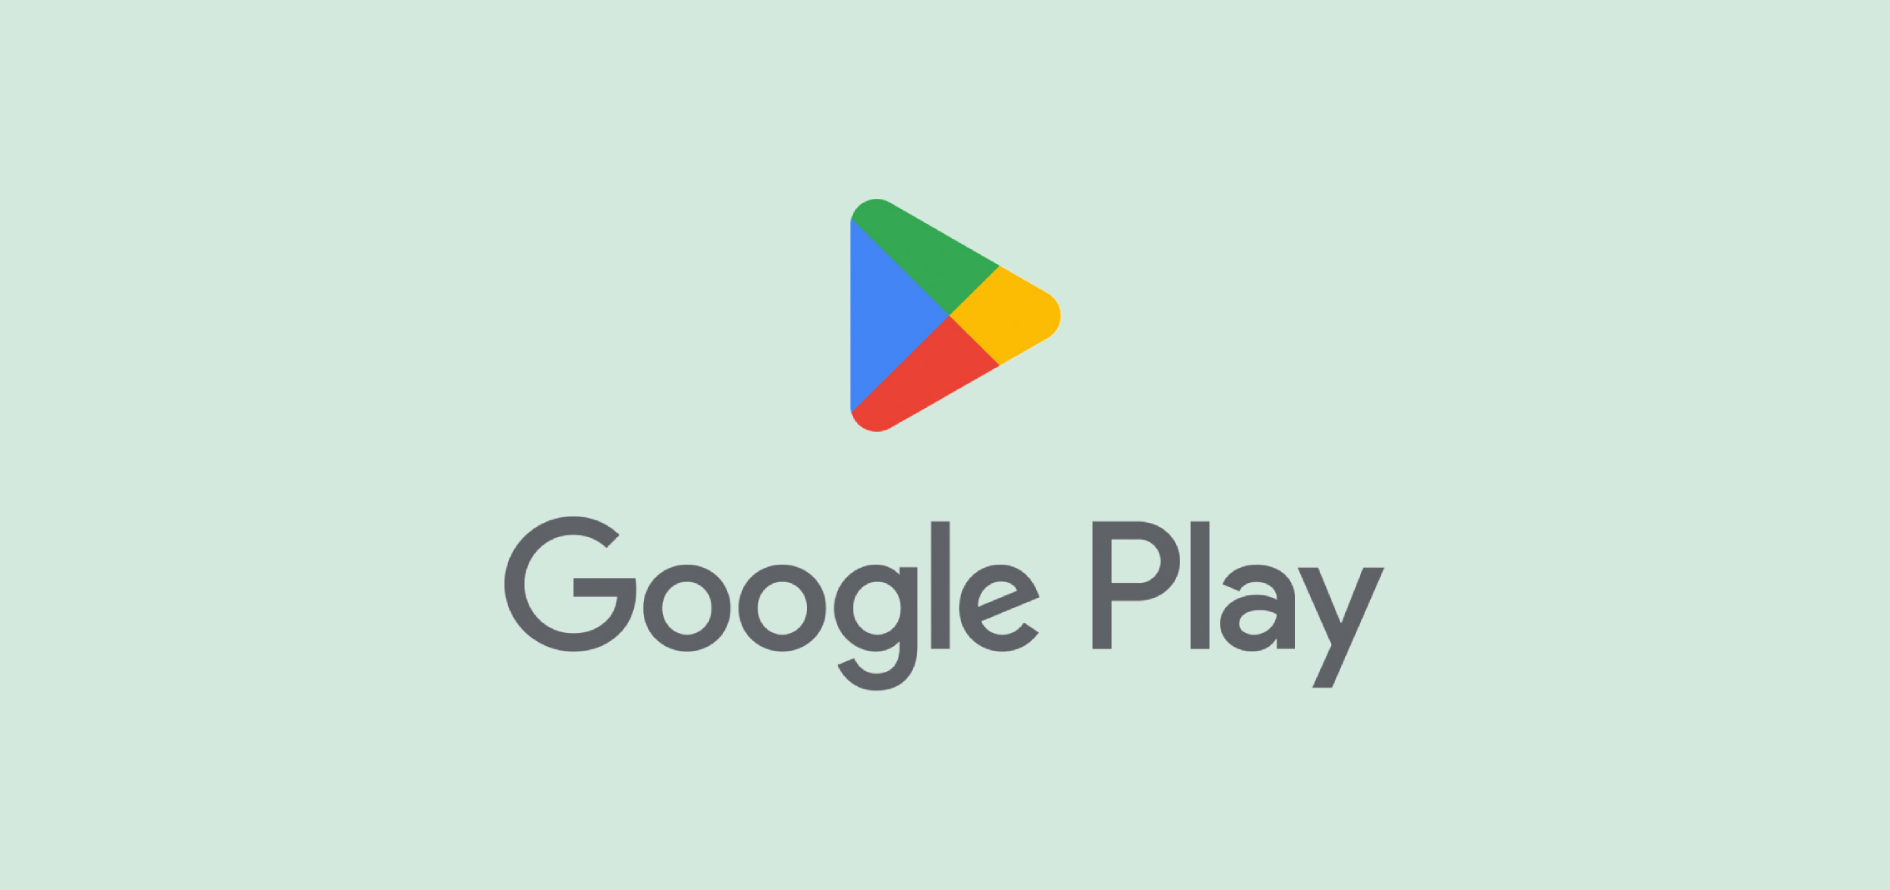 Google Play. Значок Google Play. Google Play Market лого. Иконка Google Play без фона. Google play закрывают